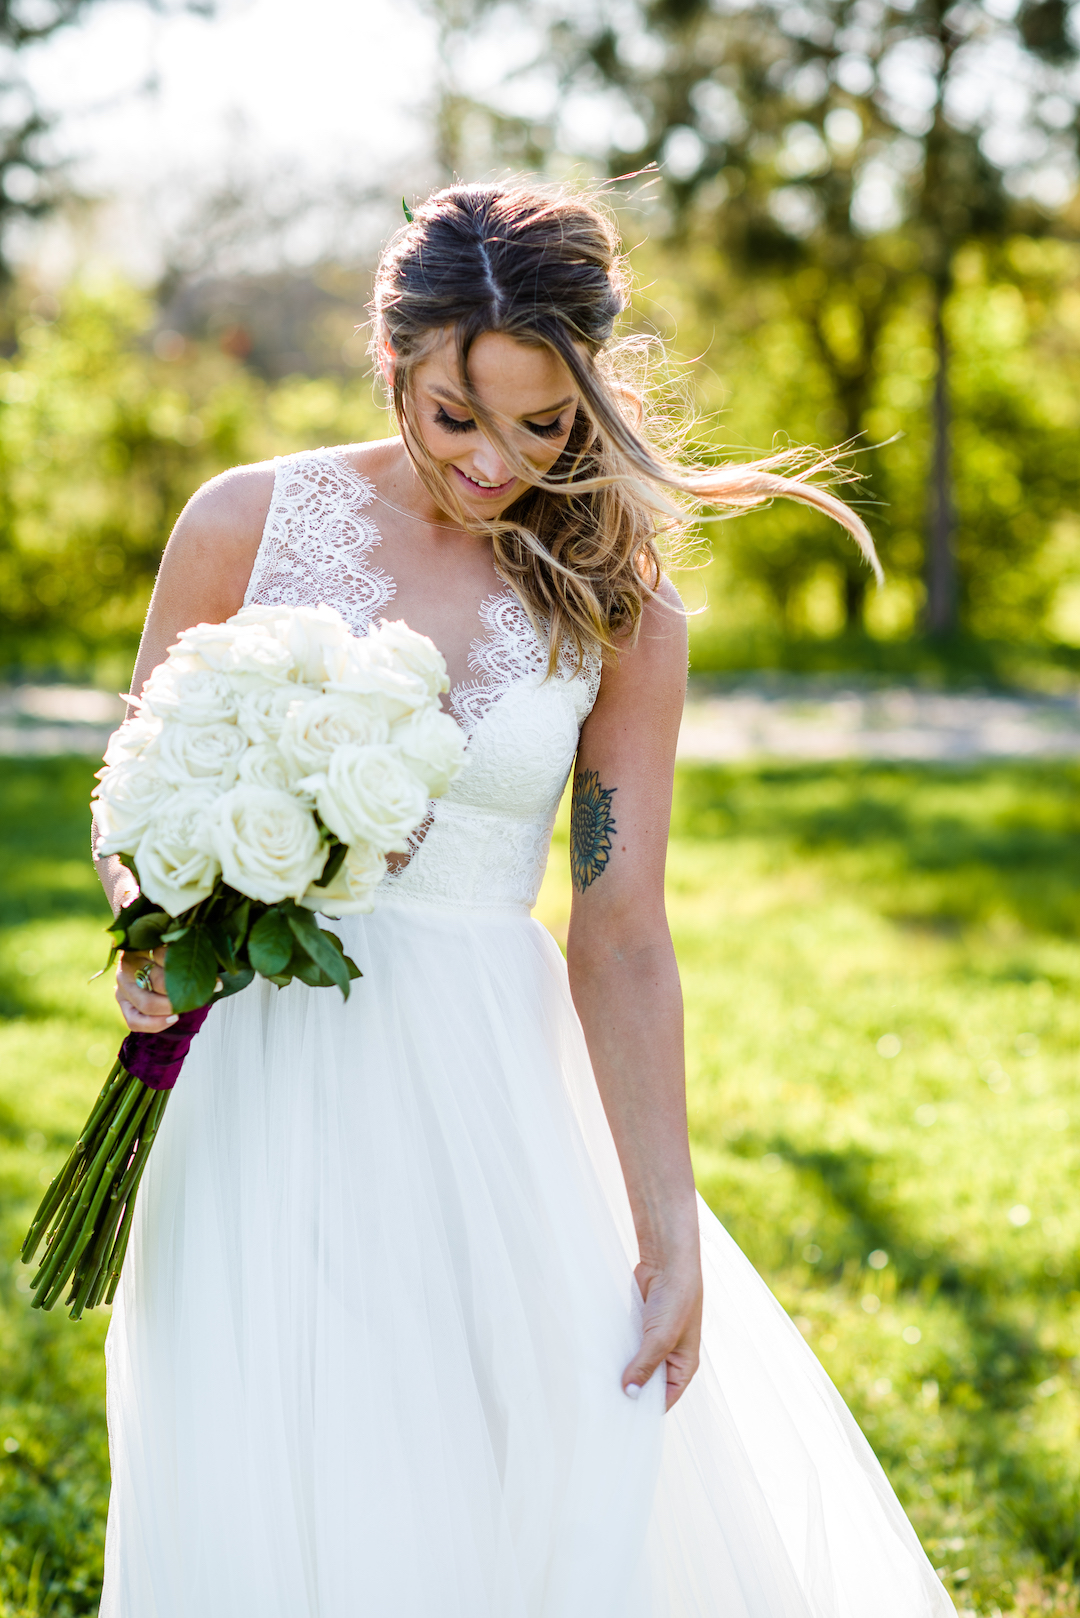 Large white floral wedding bouquet